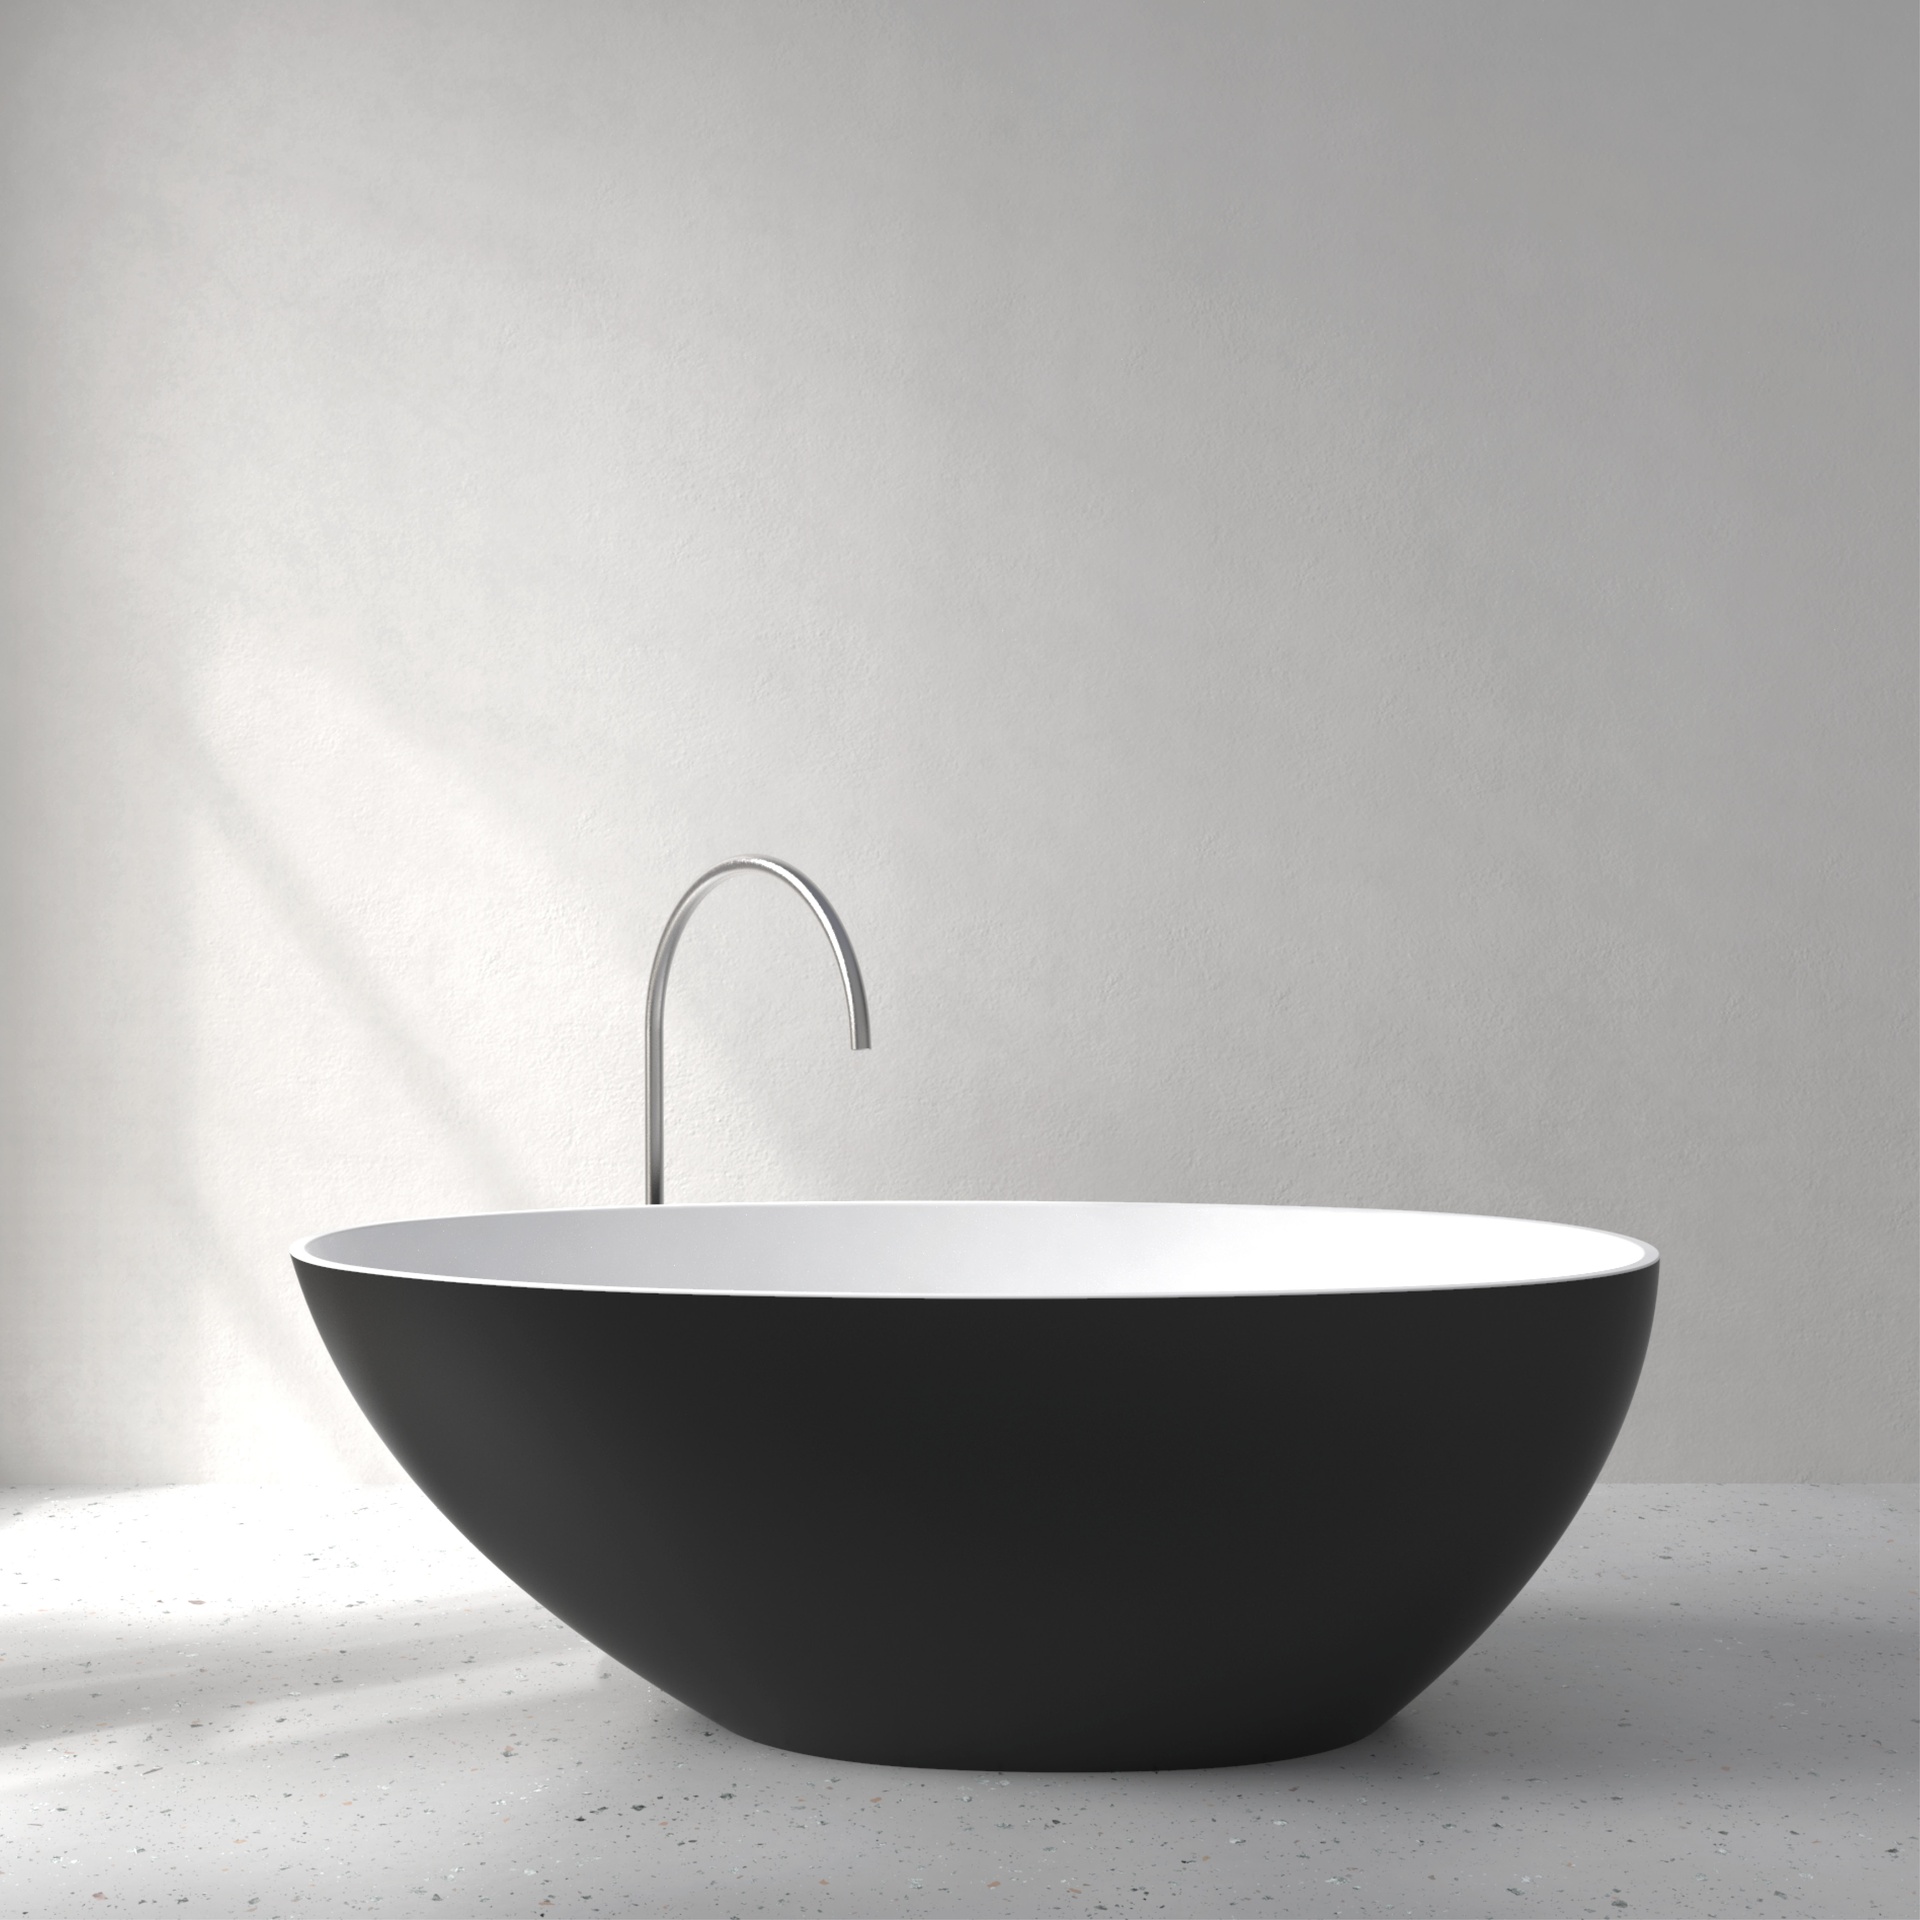 [FEA02-SDBLACK] Ease bath with Soft Touch (Deep Black)